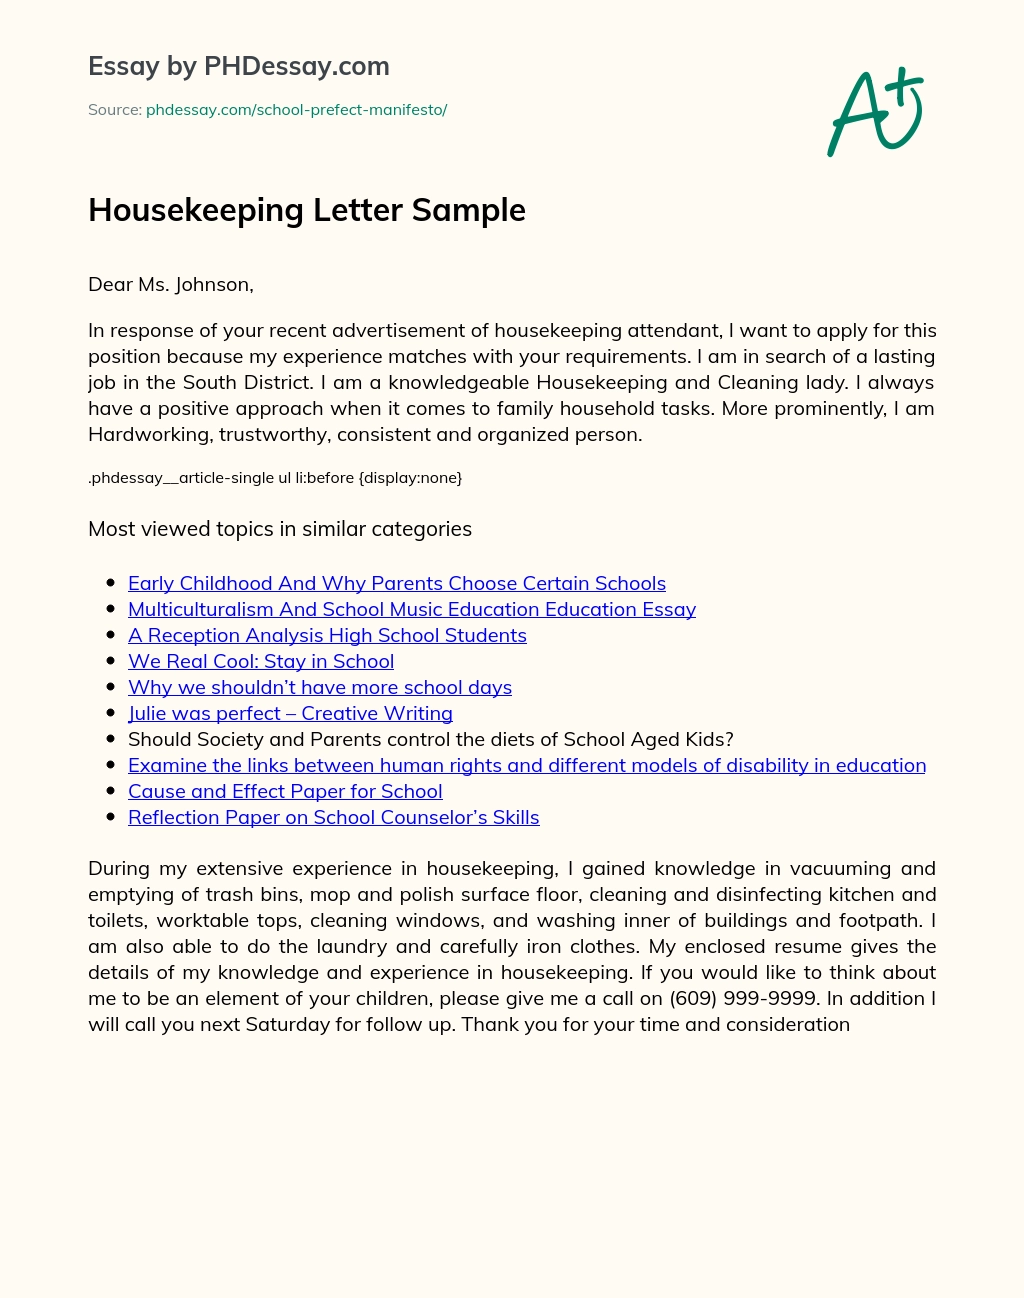 Housekeeping Letter Sample essay